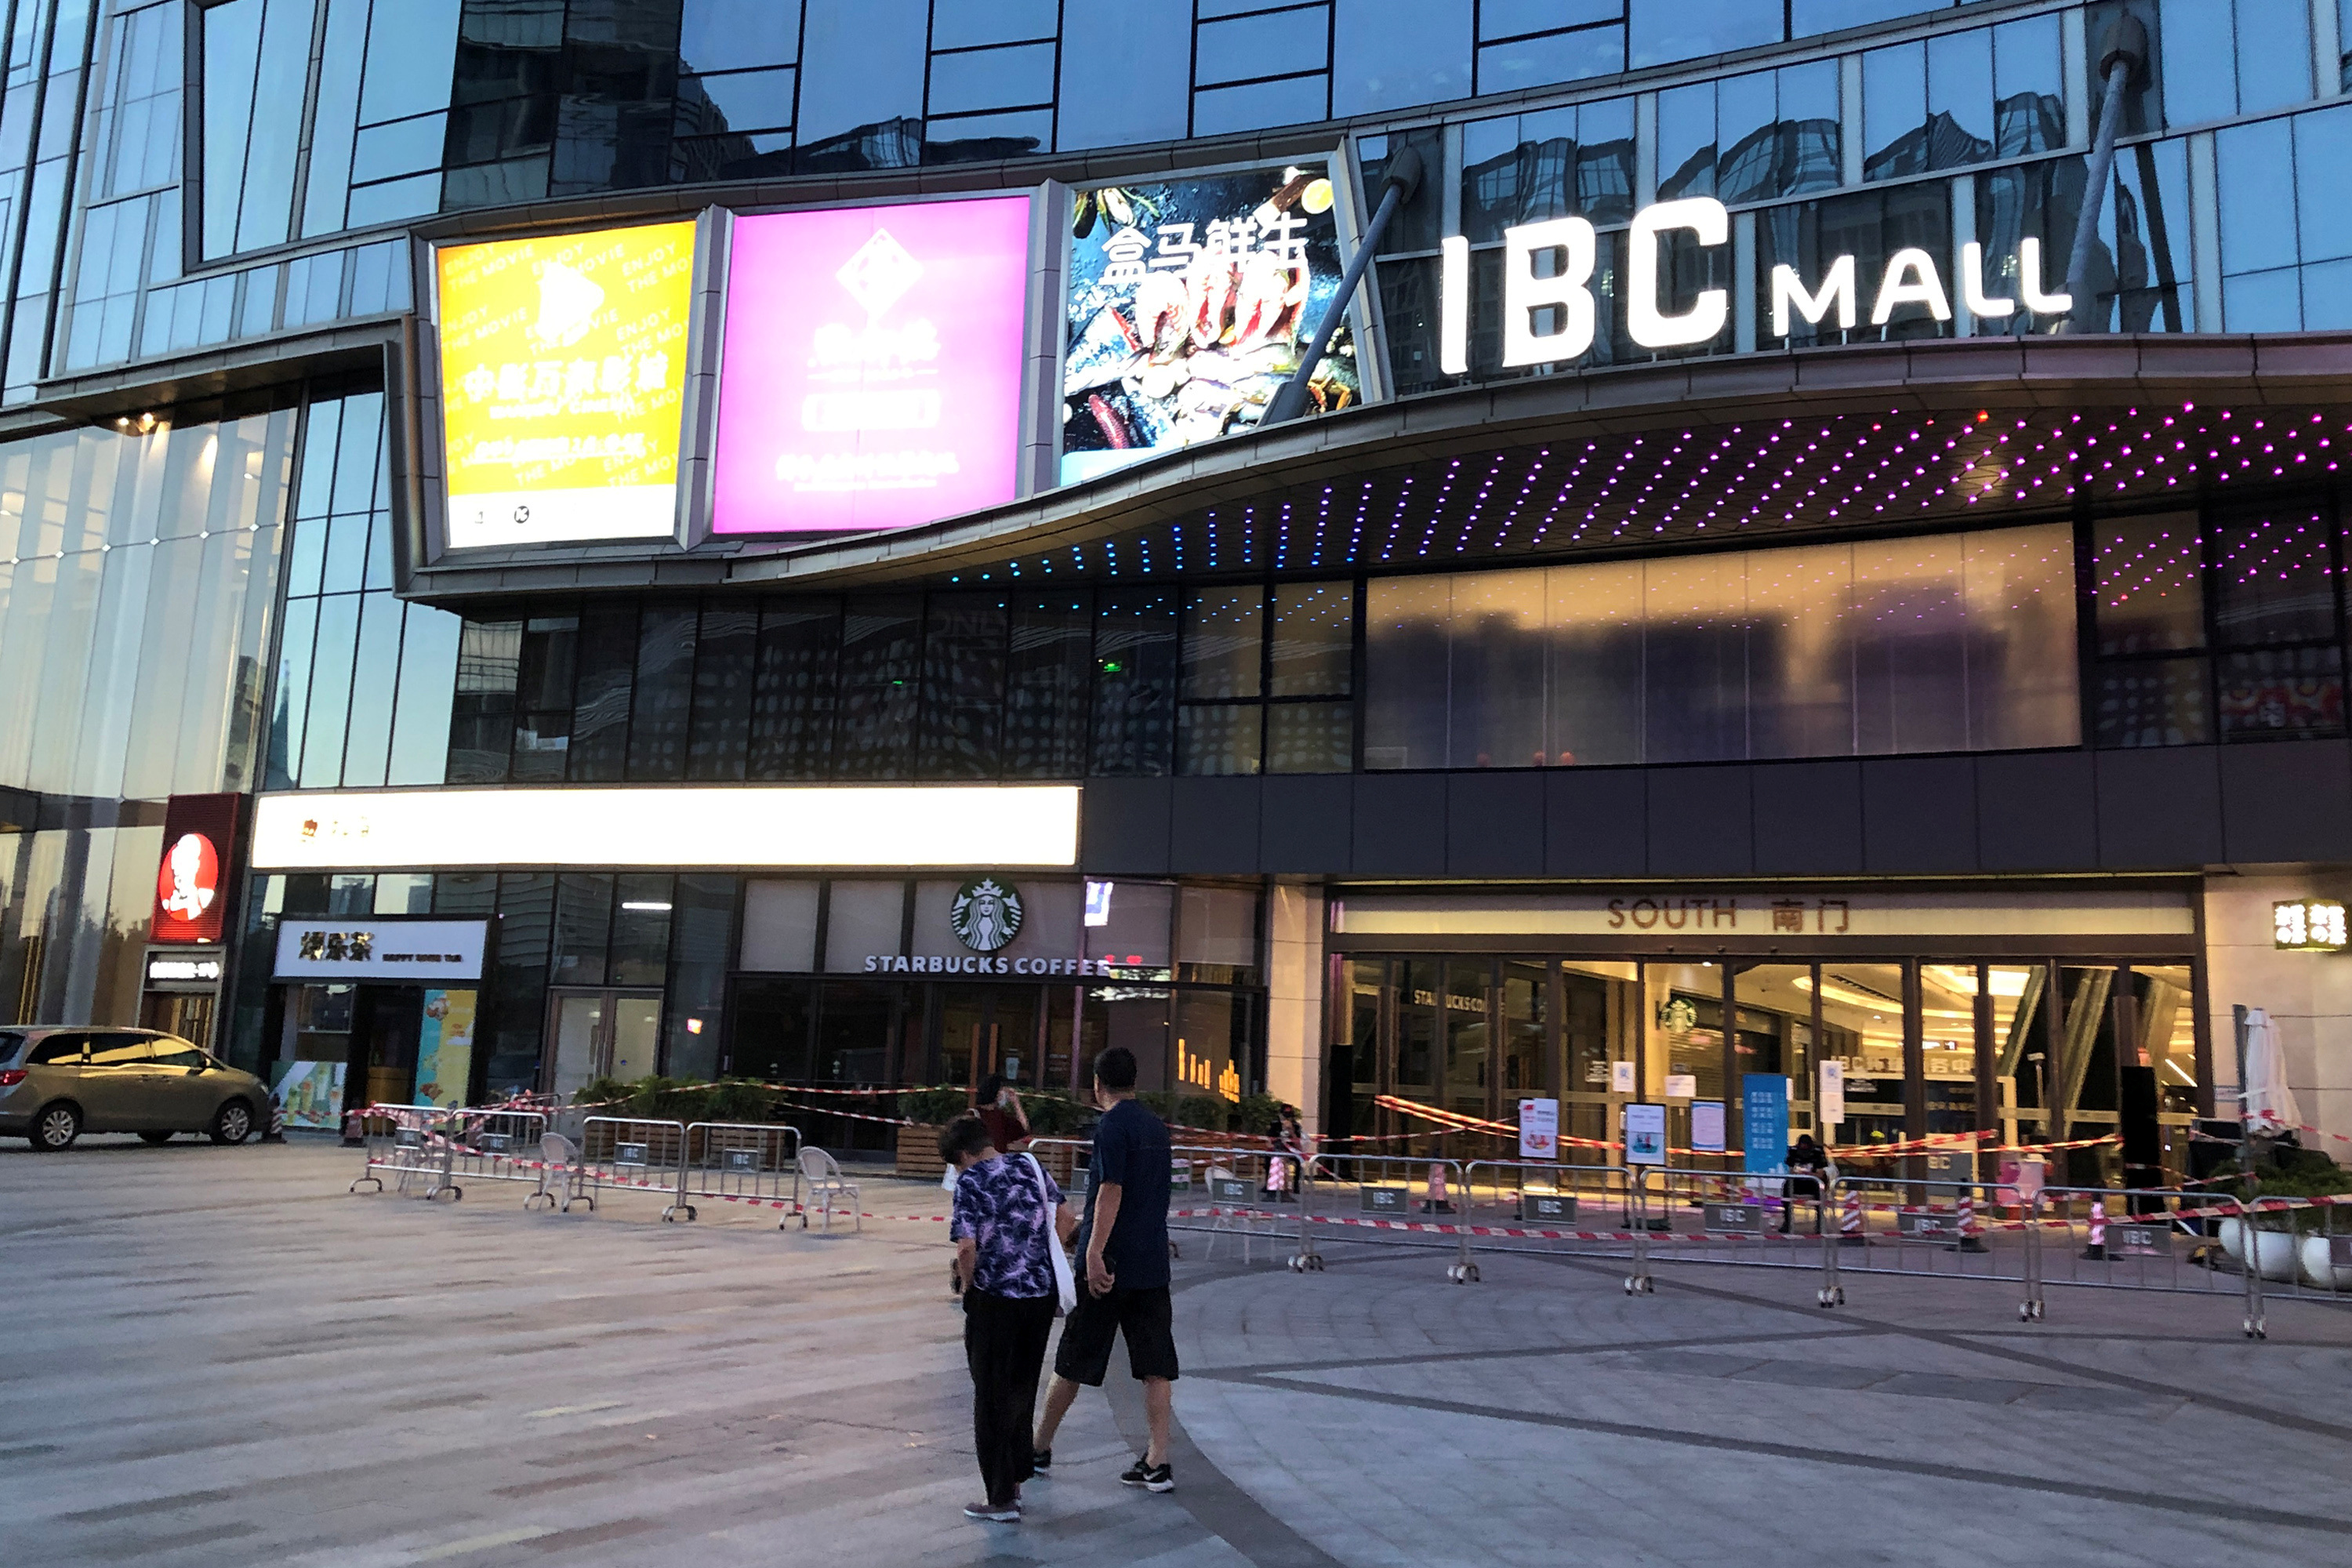 People wearing face masks walk past Shenzhen's IBC Mall